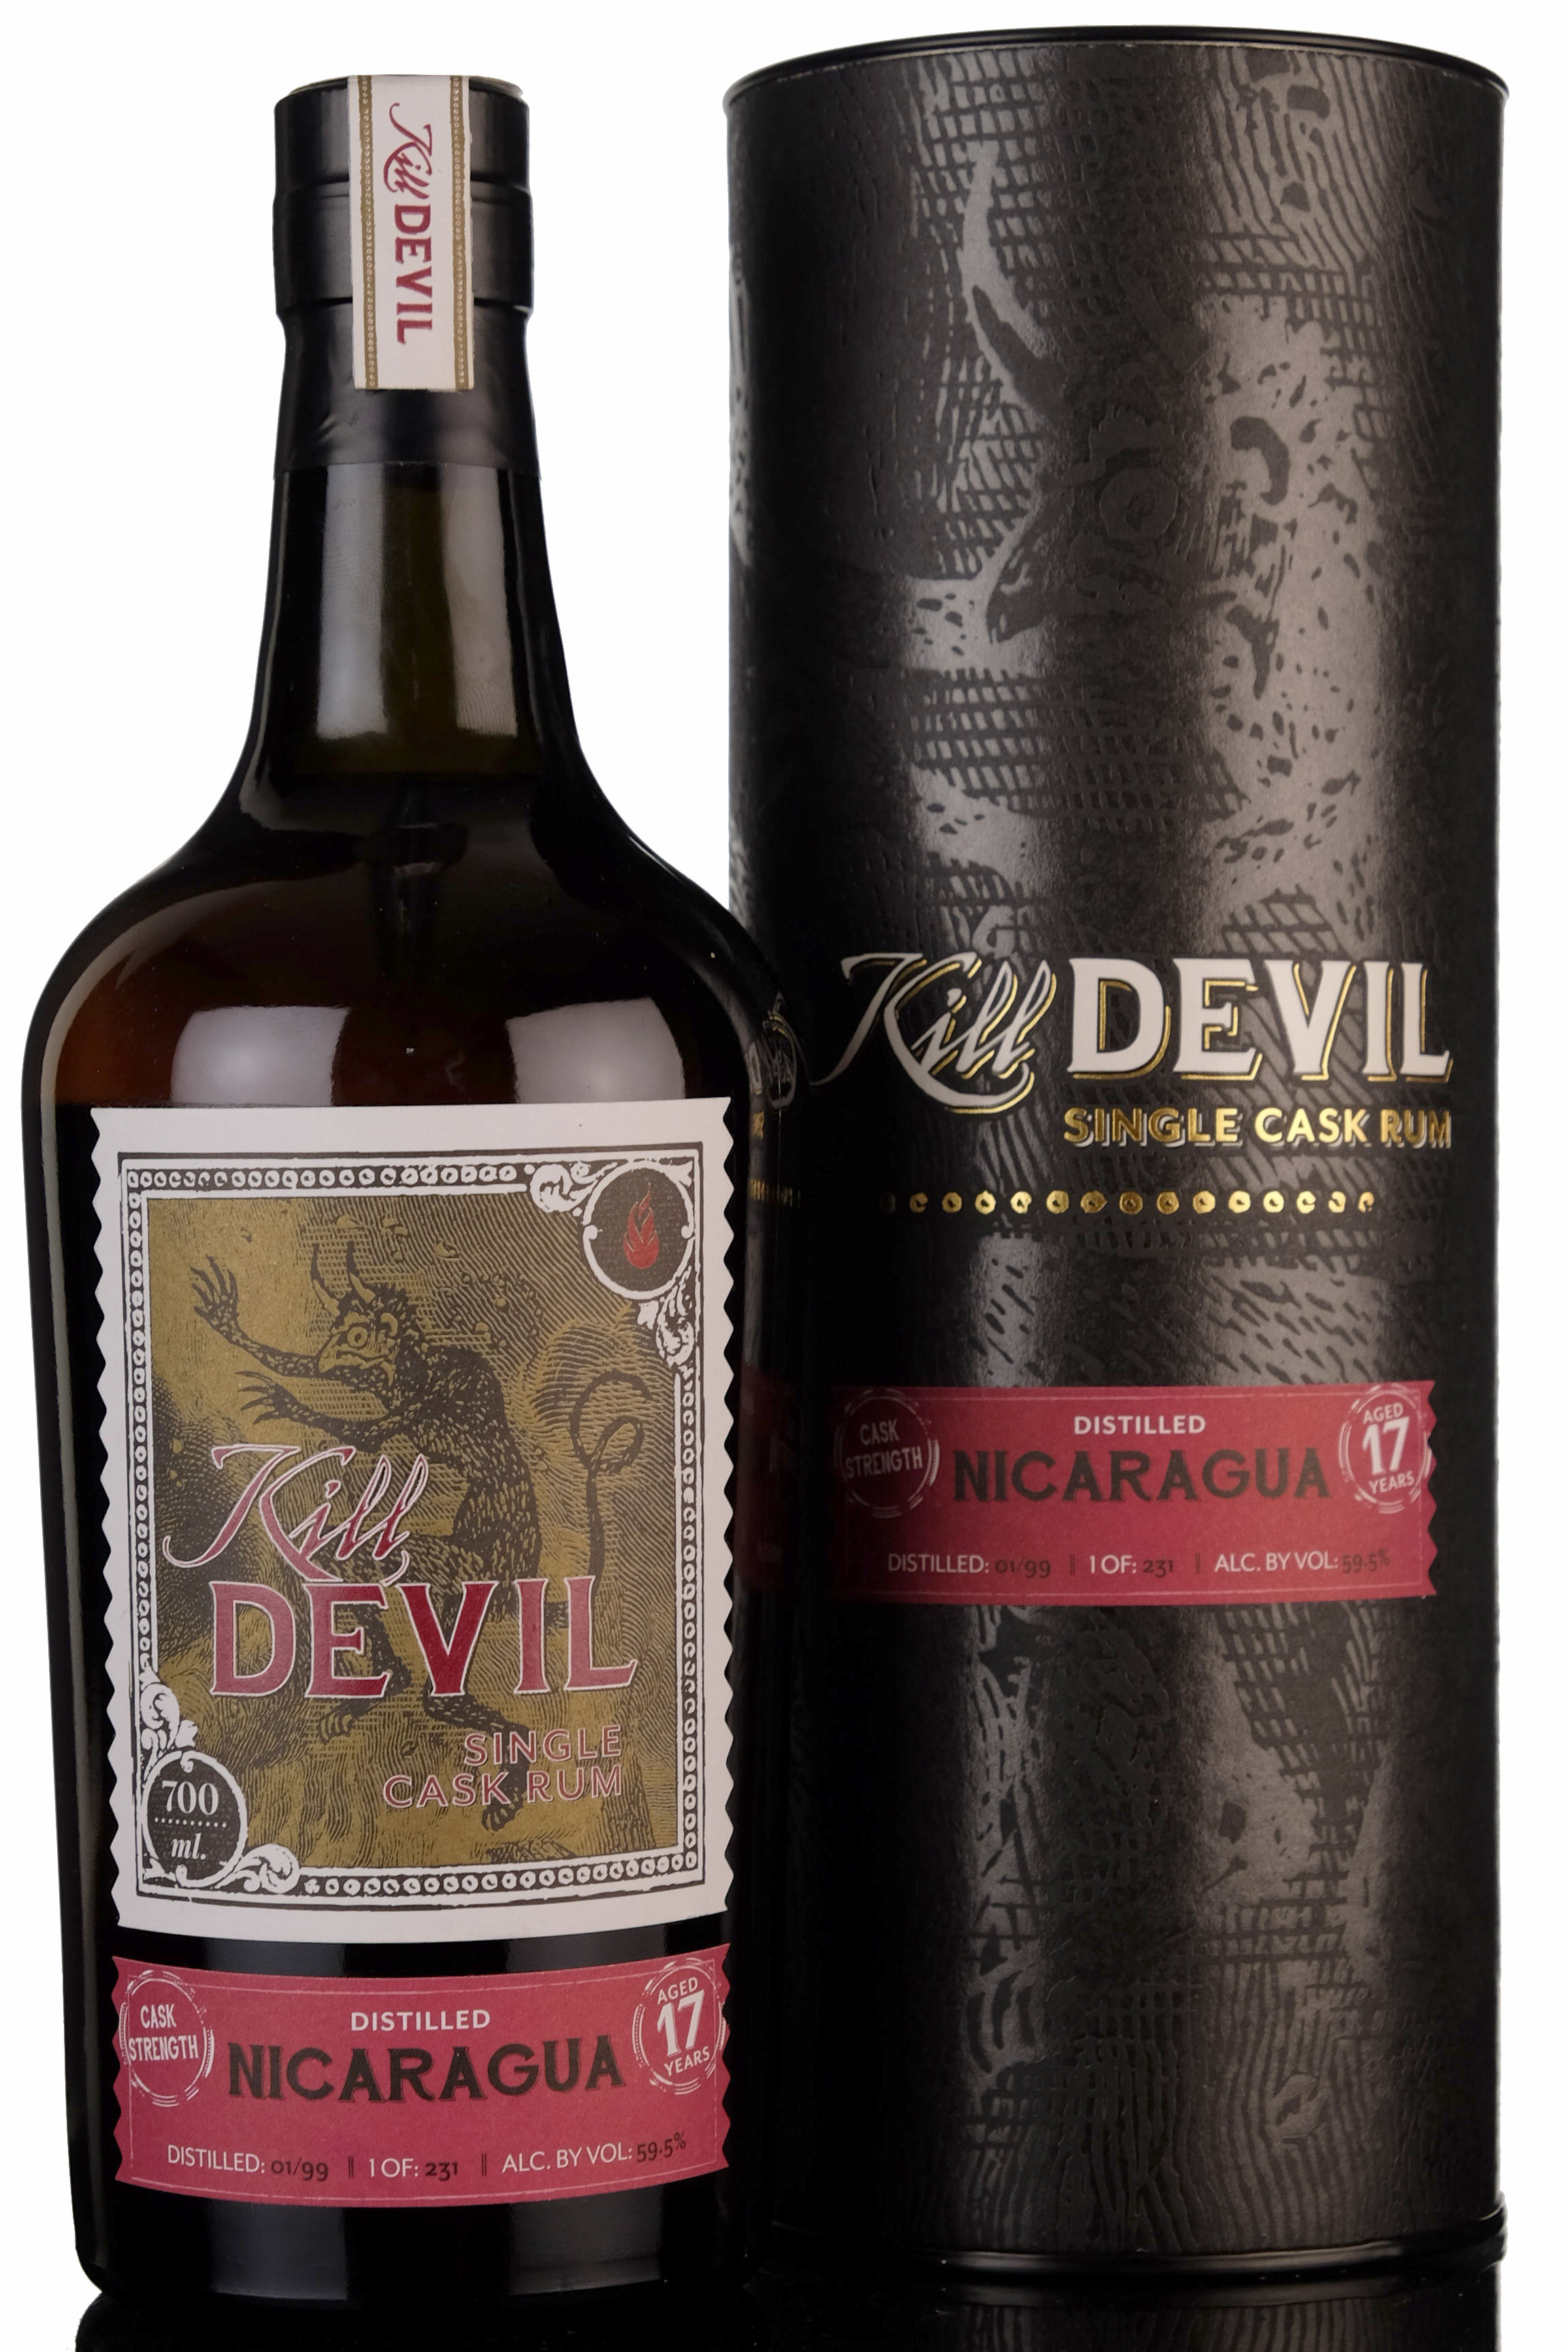 Nicaraguan 1999 - 17 Year Old - Kill Devil Single Cask Rum